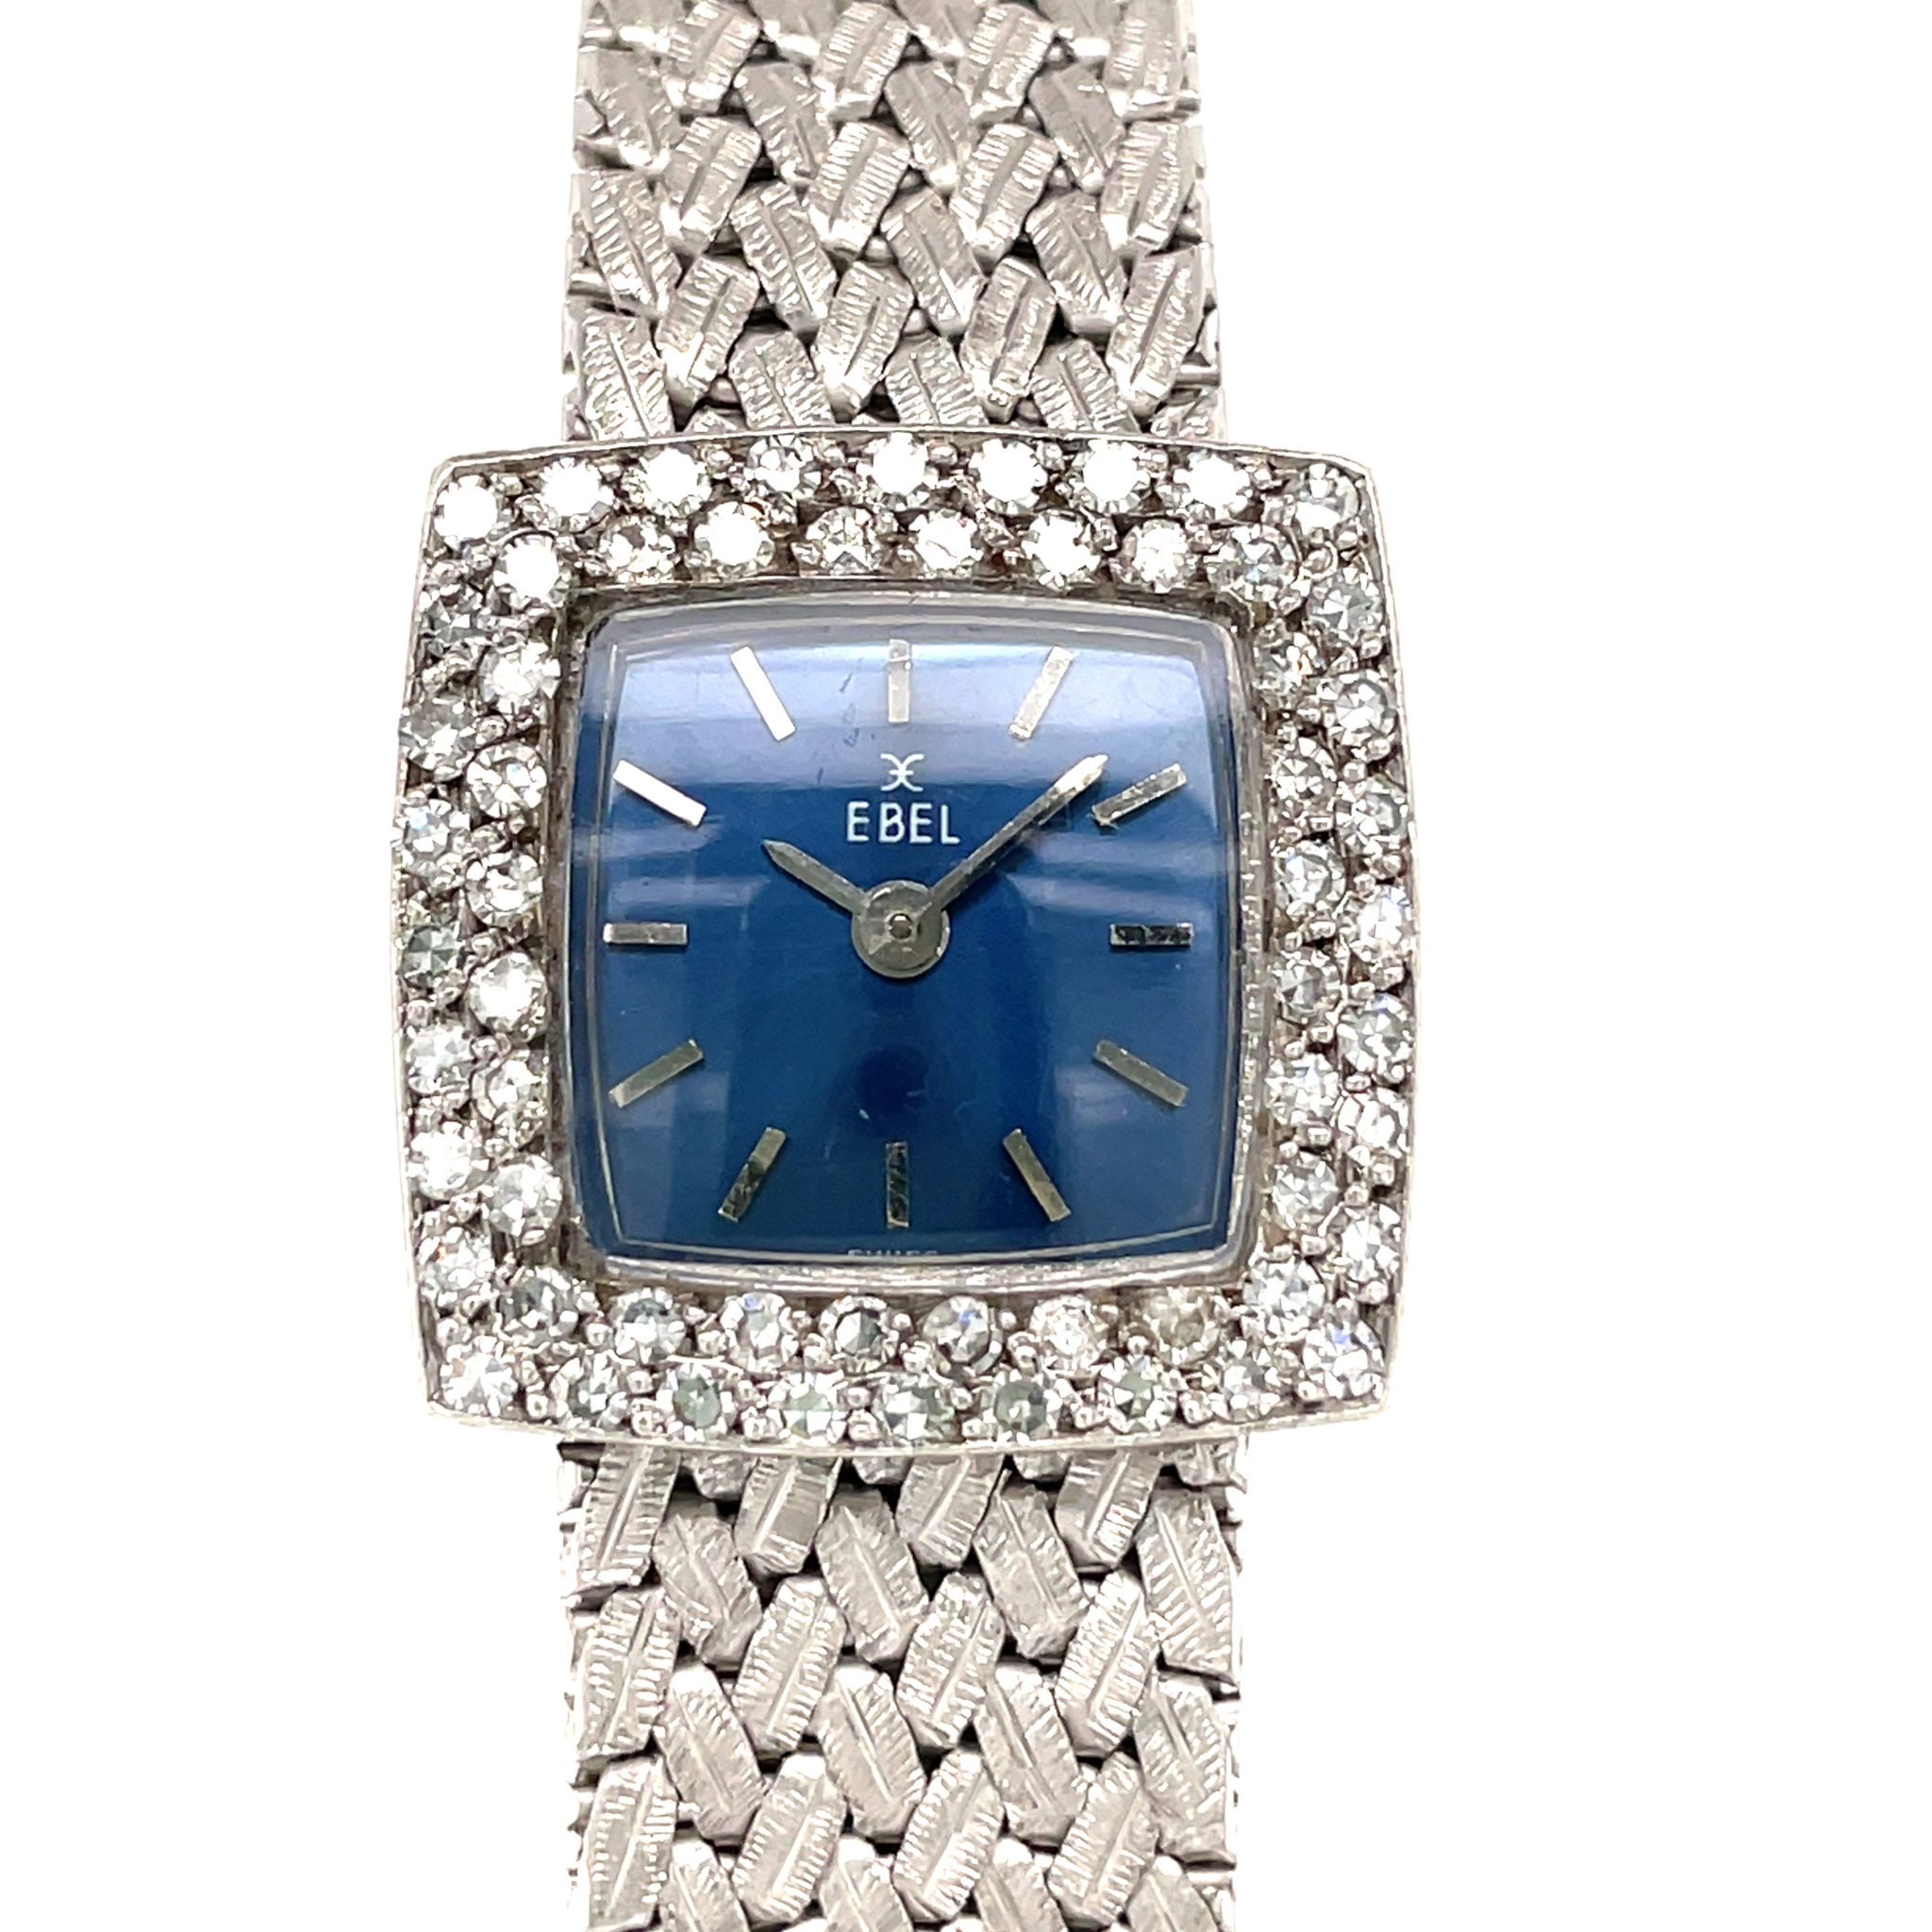  Ebel Ladys 1960s Whitegold 750 Diamond Watch, VINTAGE Fully serviced 05/2022